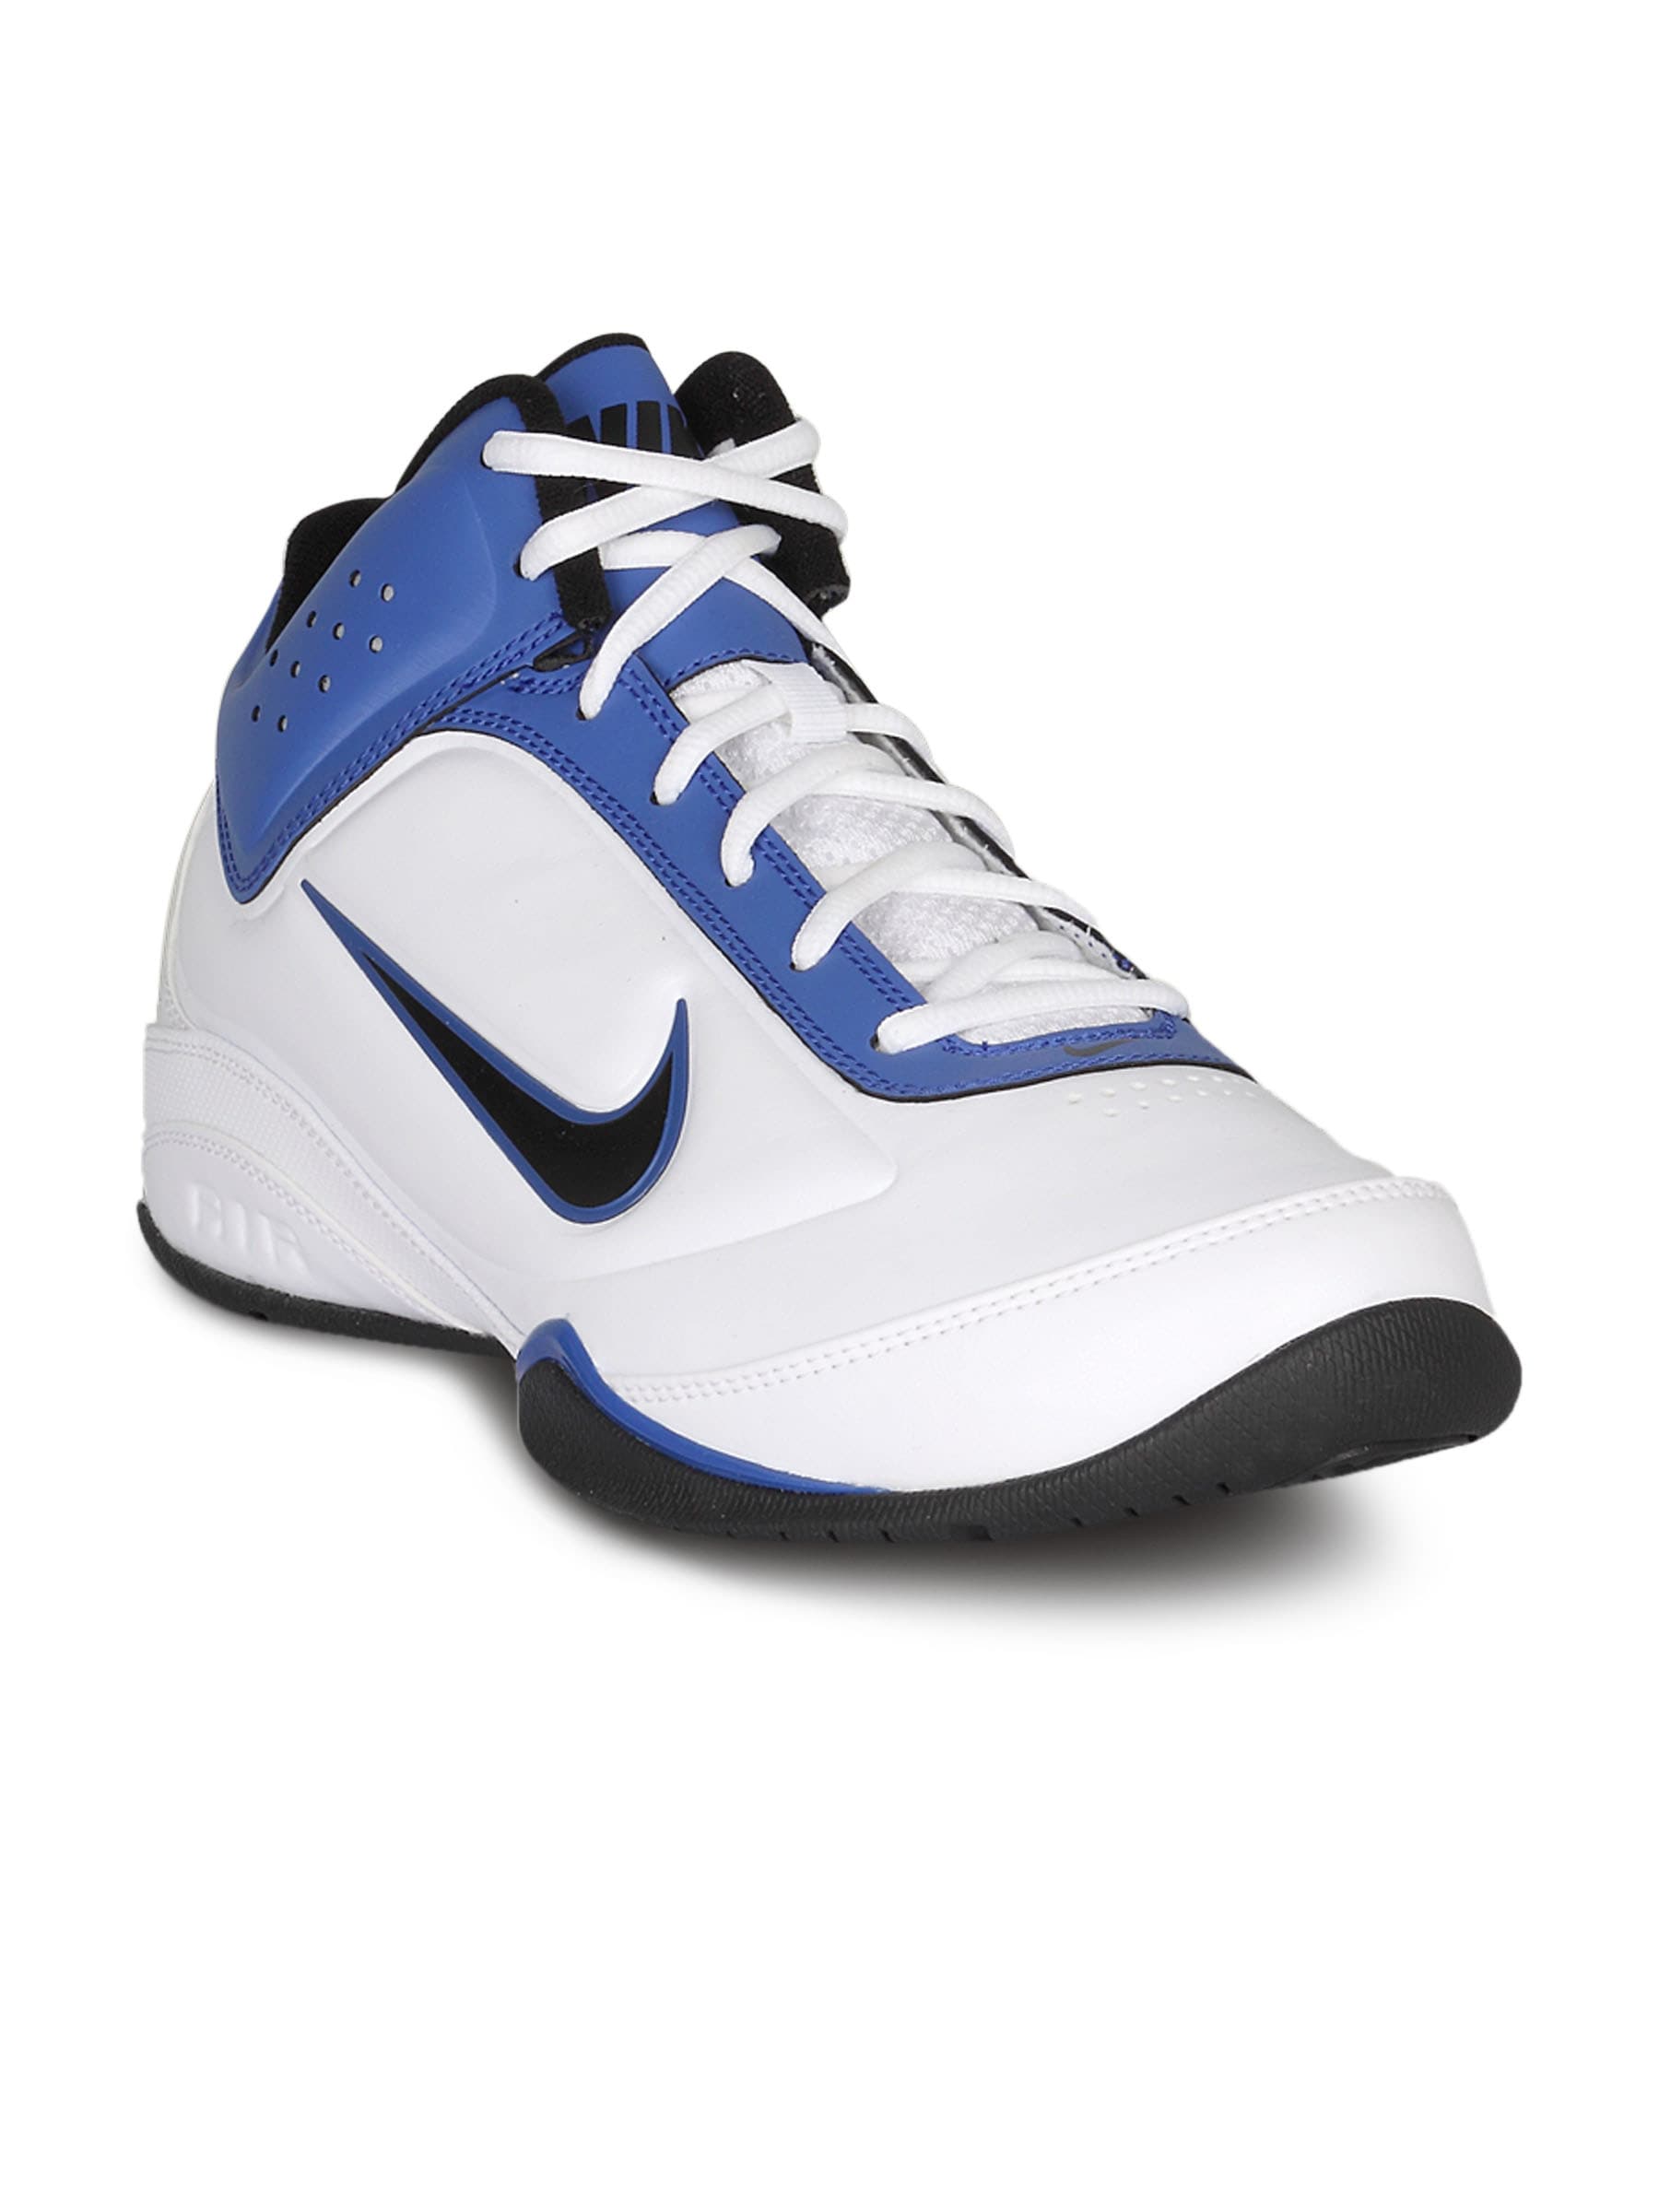 Nike Men Air Fligh Showup White Shoe